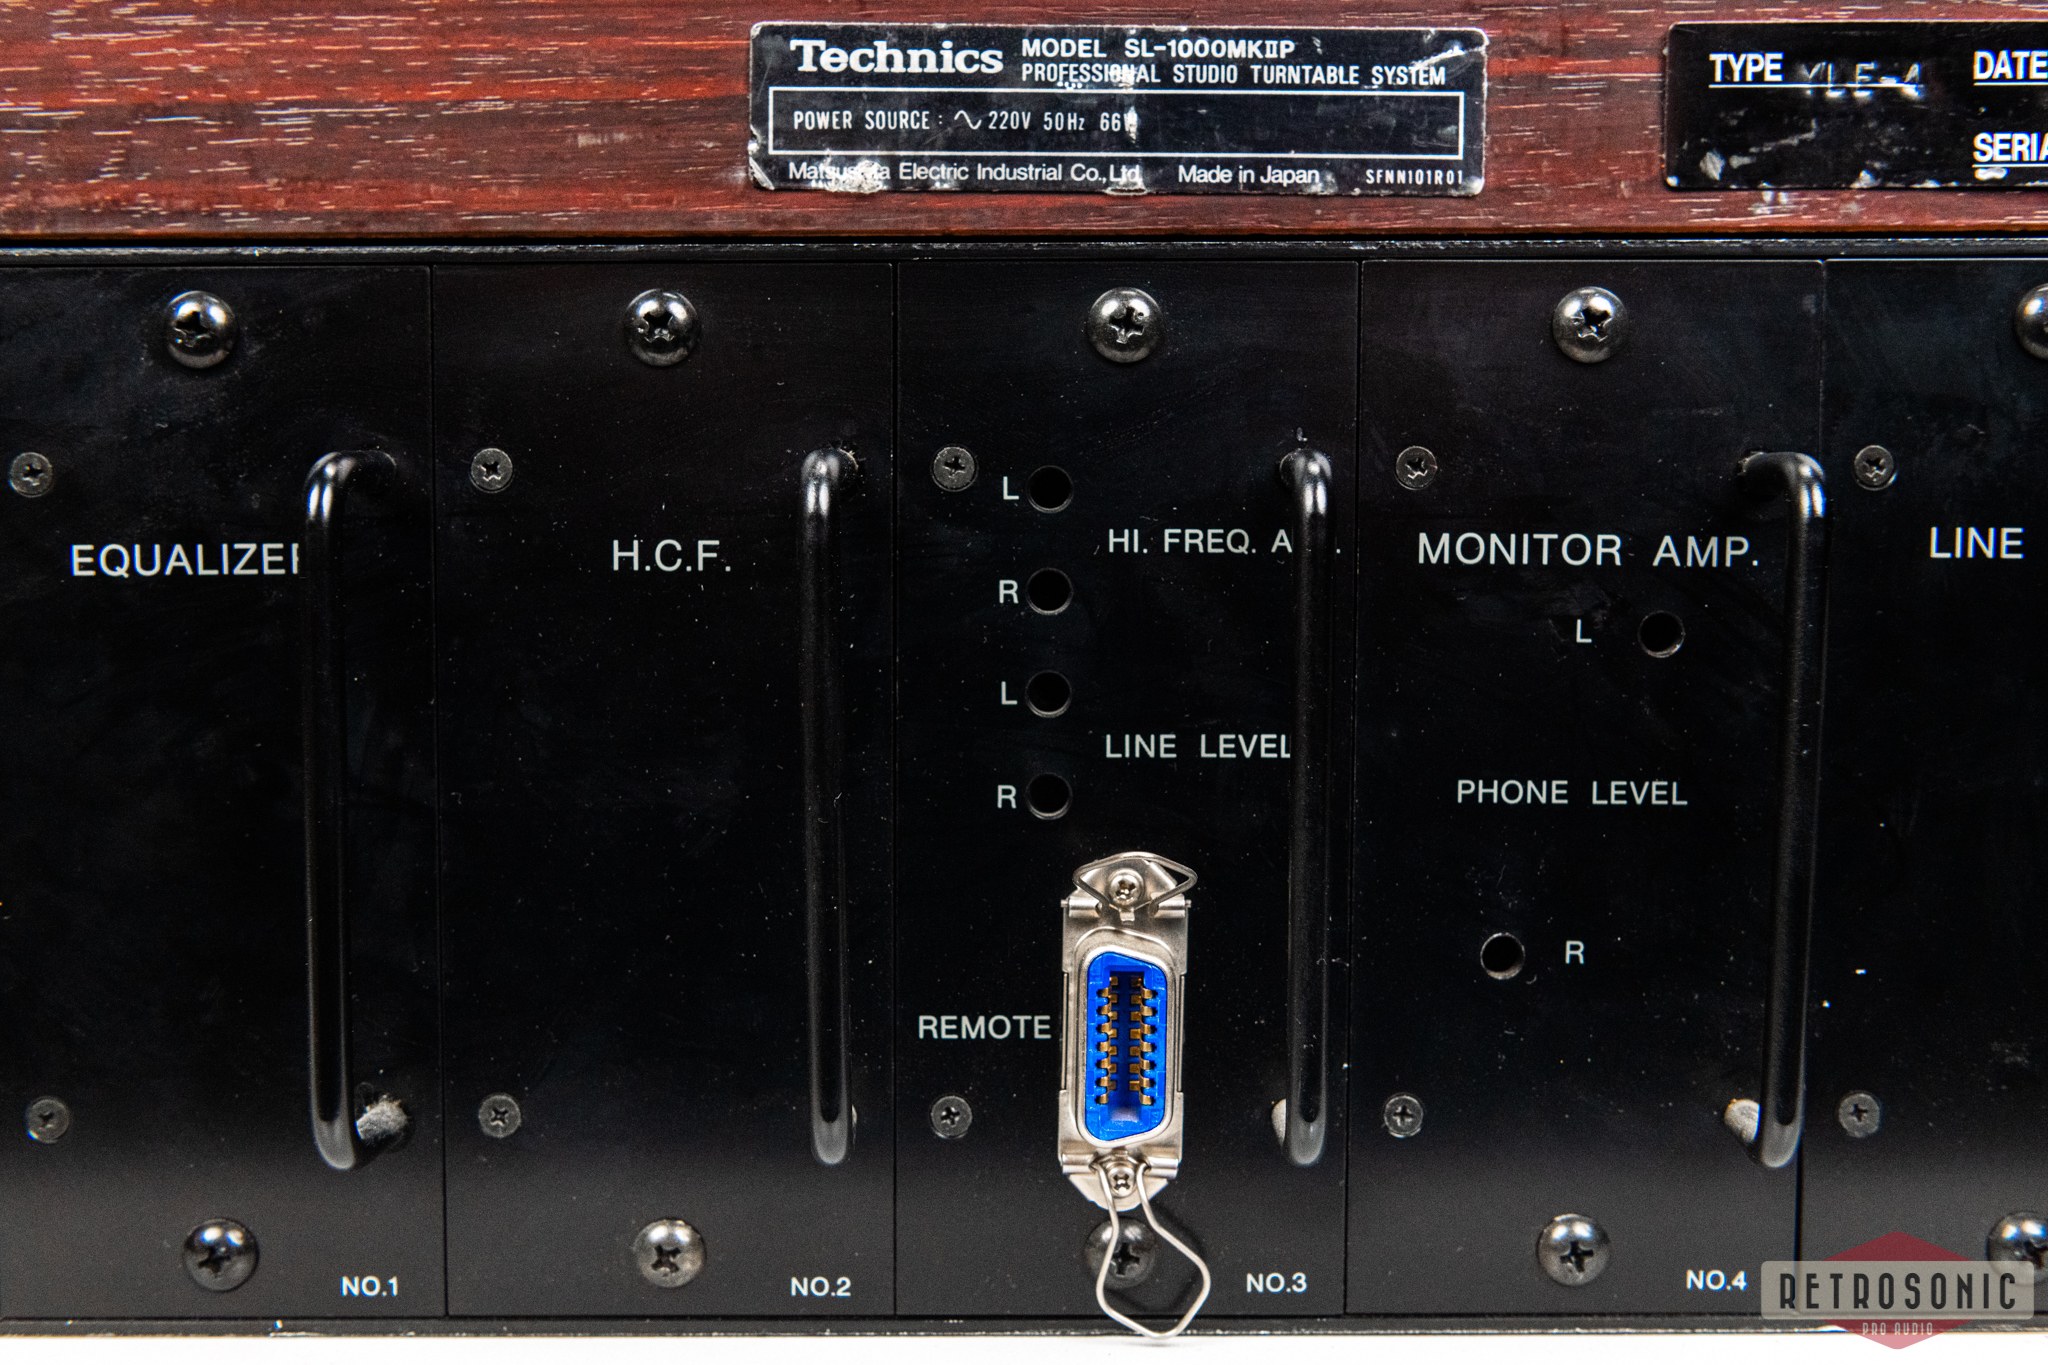 Technics SL-1000MK2P Professional Studio Turntable. Year 1984